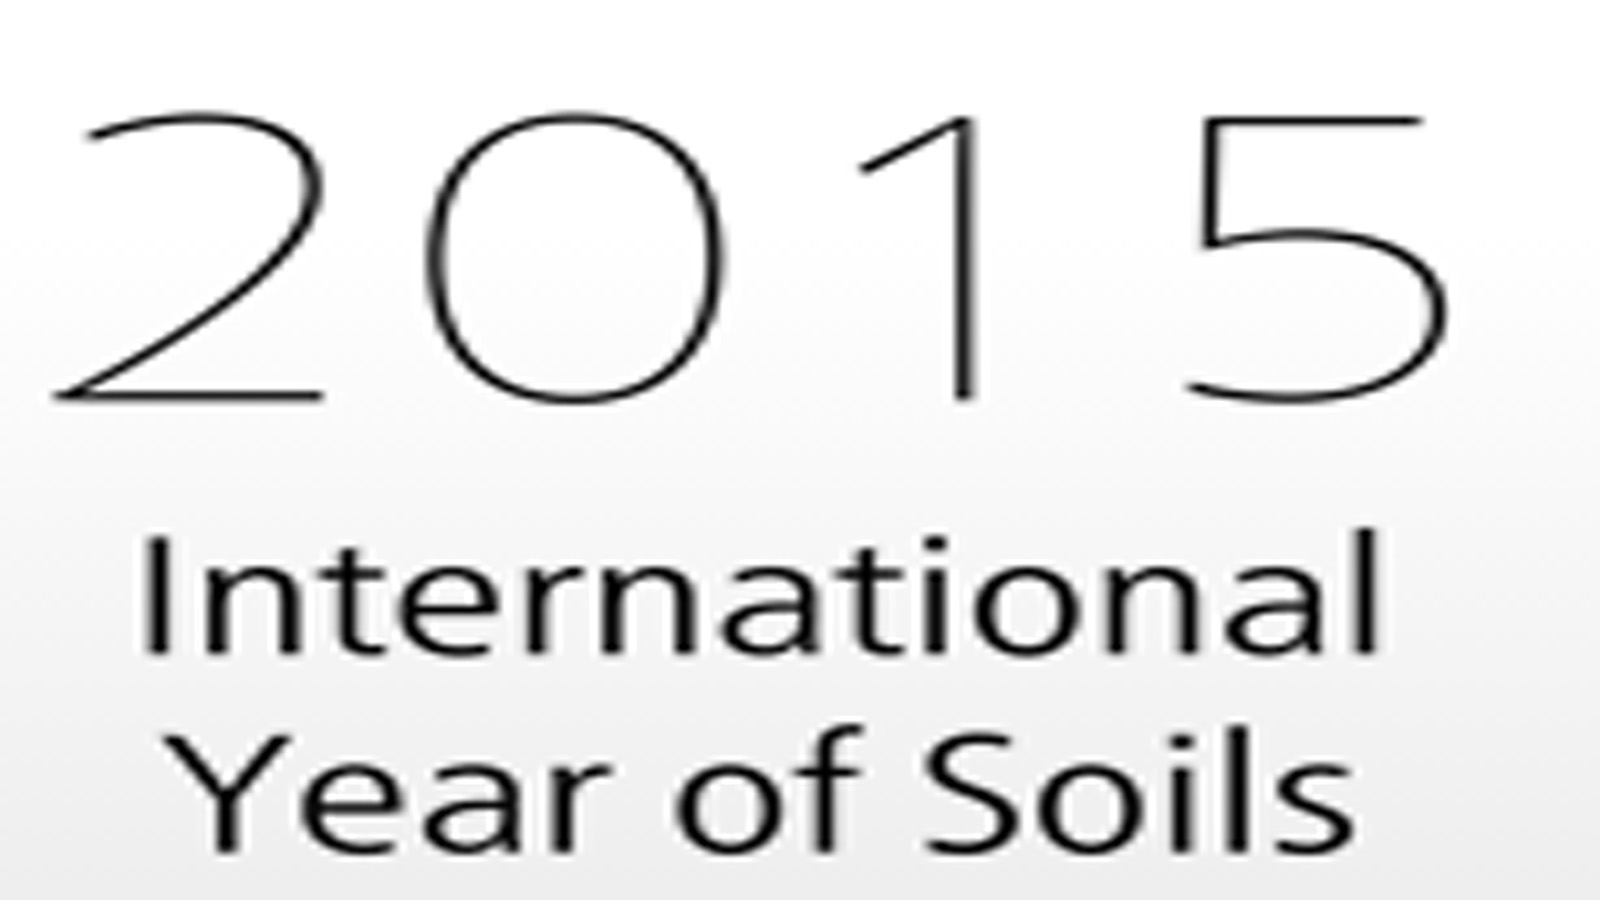 INTERNATIONAL YEAR OF SOILS